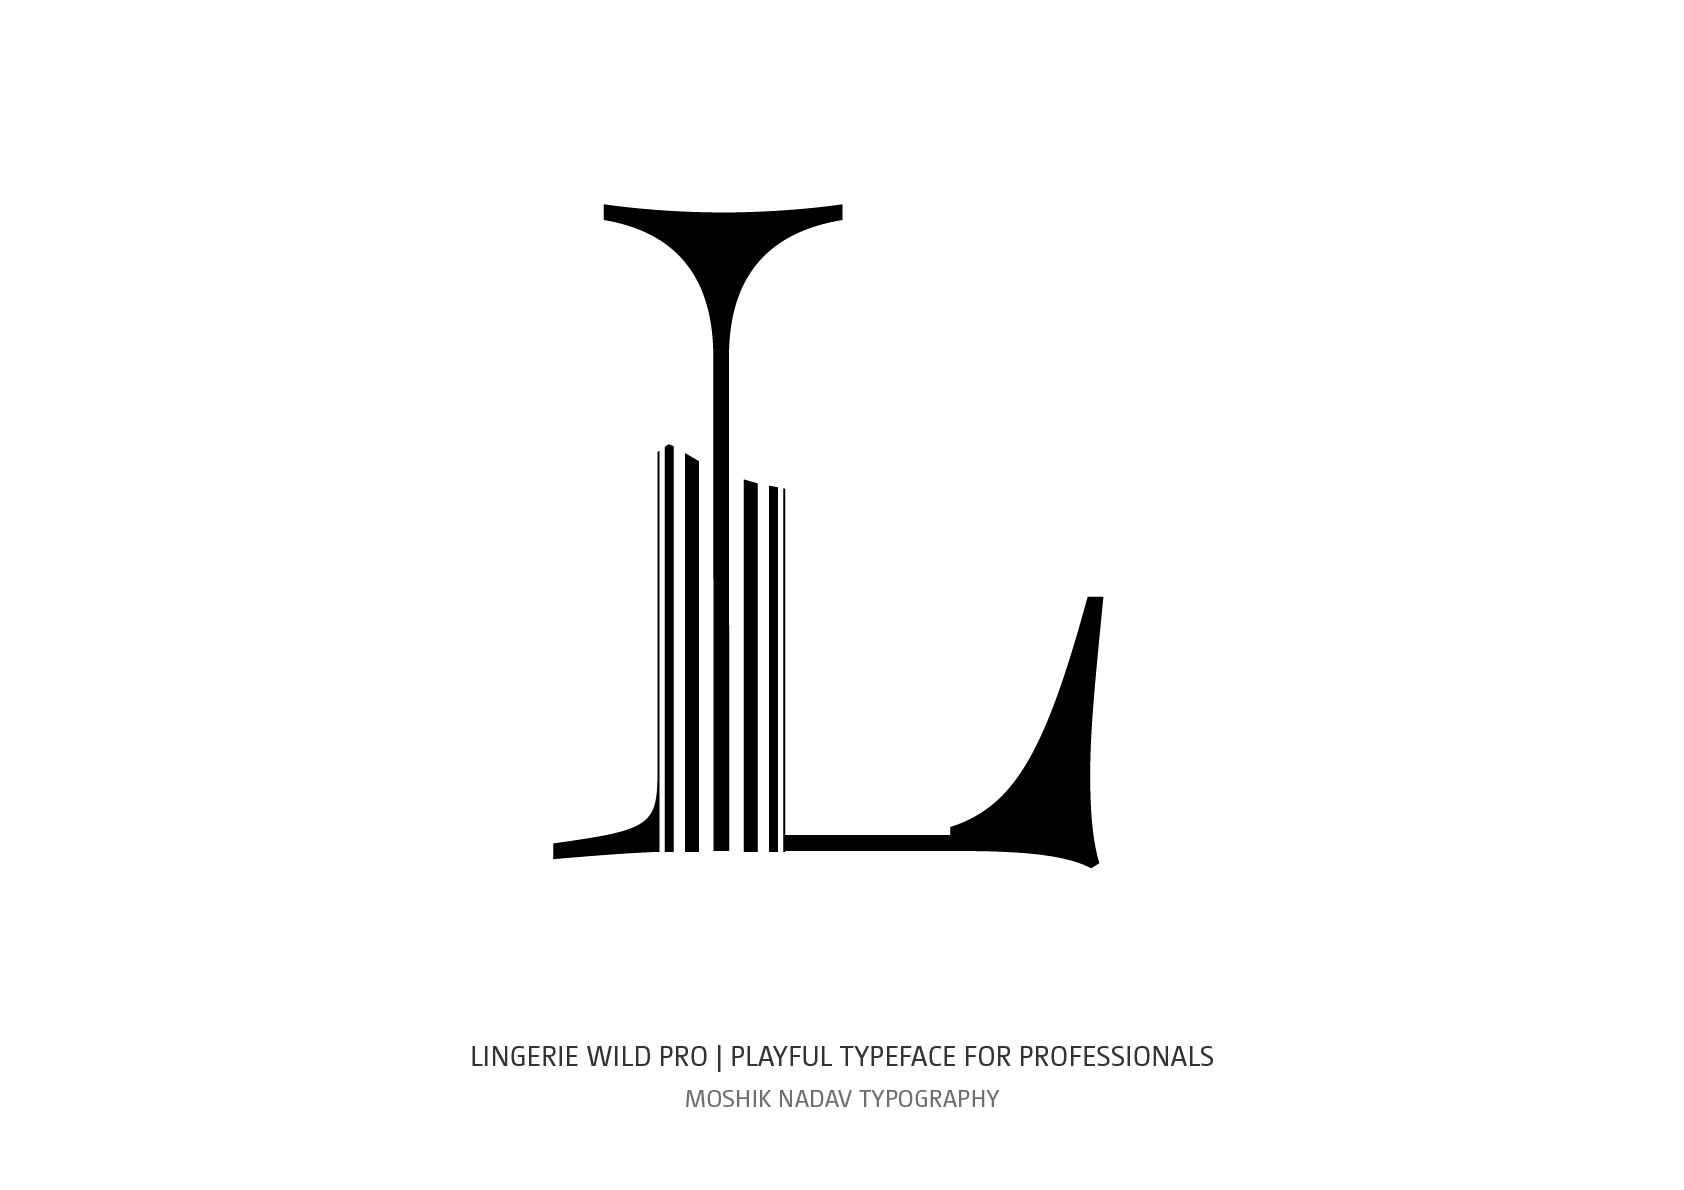 Lingerie Wild Pro Typeface uppercase L designed by Moshik Nadav Typography